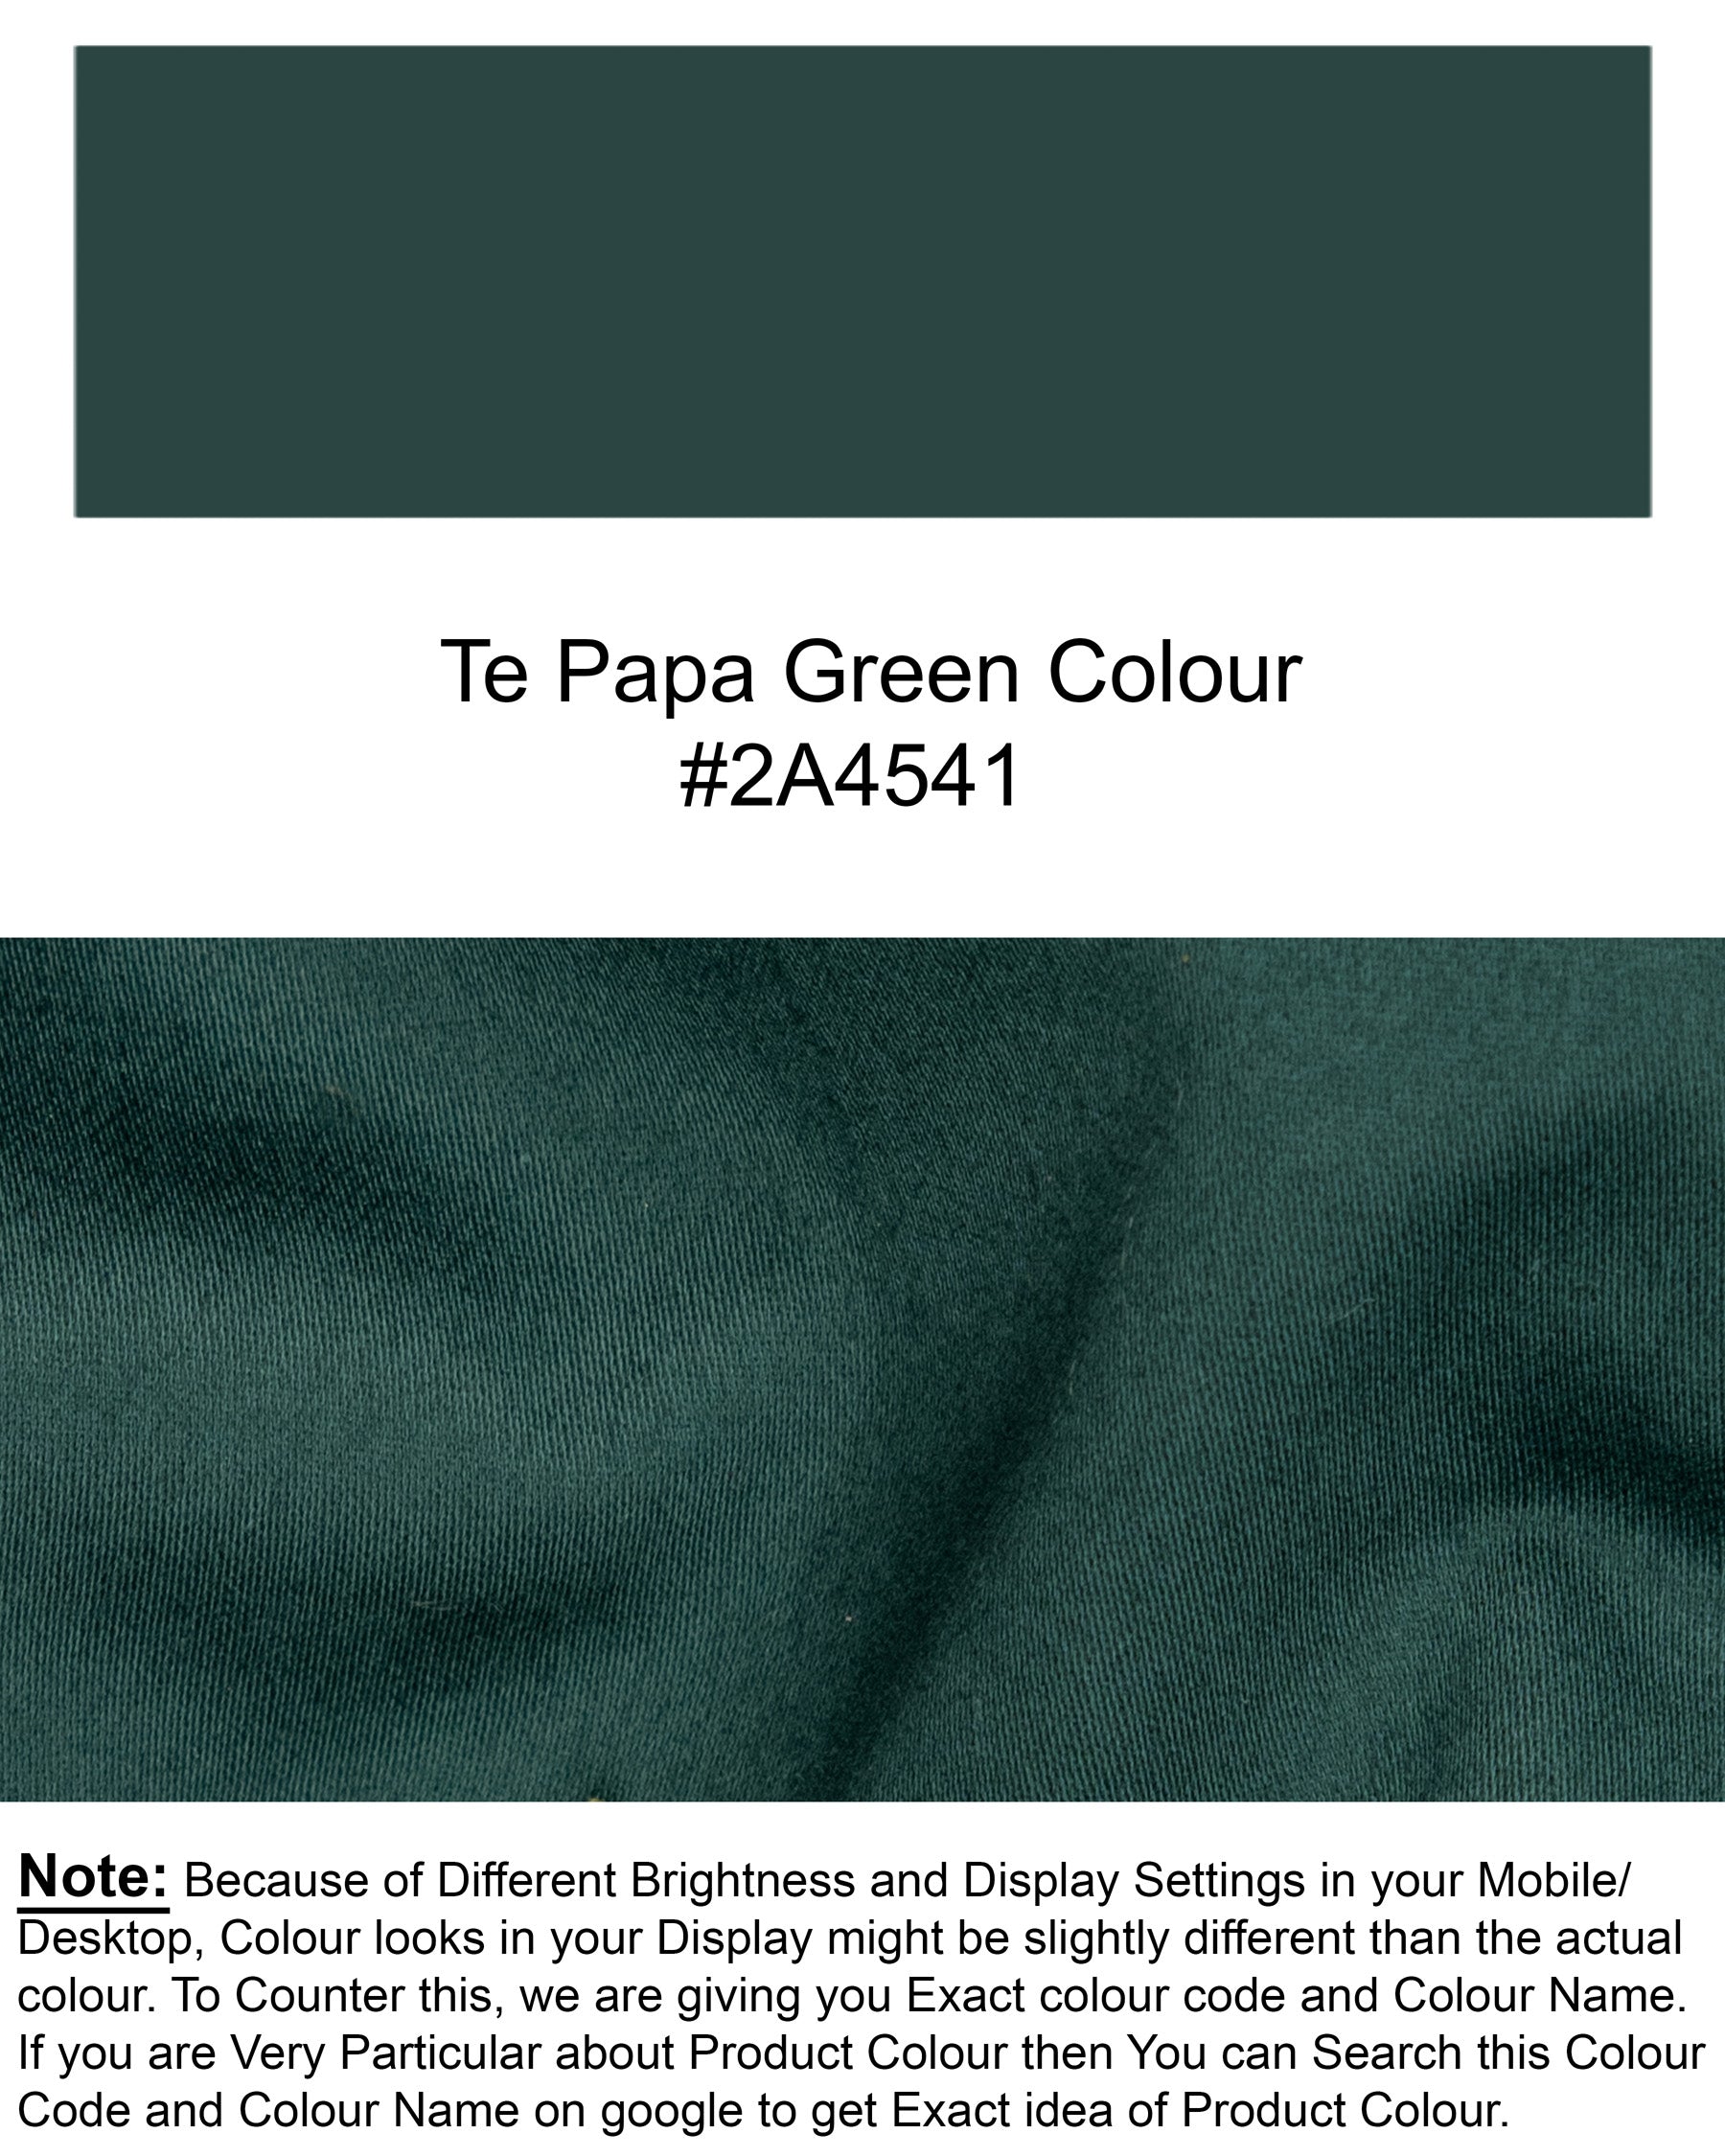 Te Papa Green Double Breasted Premium Cotton Blazer BL1327-DB-36, BL1327-DB-38, BL1327-DB-40, BL1327-DB-42, BL1327-DB-44, BL1327-DB-46, BL1327-DB-48, BL1327-DB-50, BL1327-DB-52, BL1327-DB-54, BL1327-DB-56, BL1327-DB-58, BL1327-DB-60